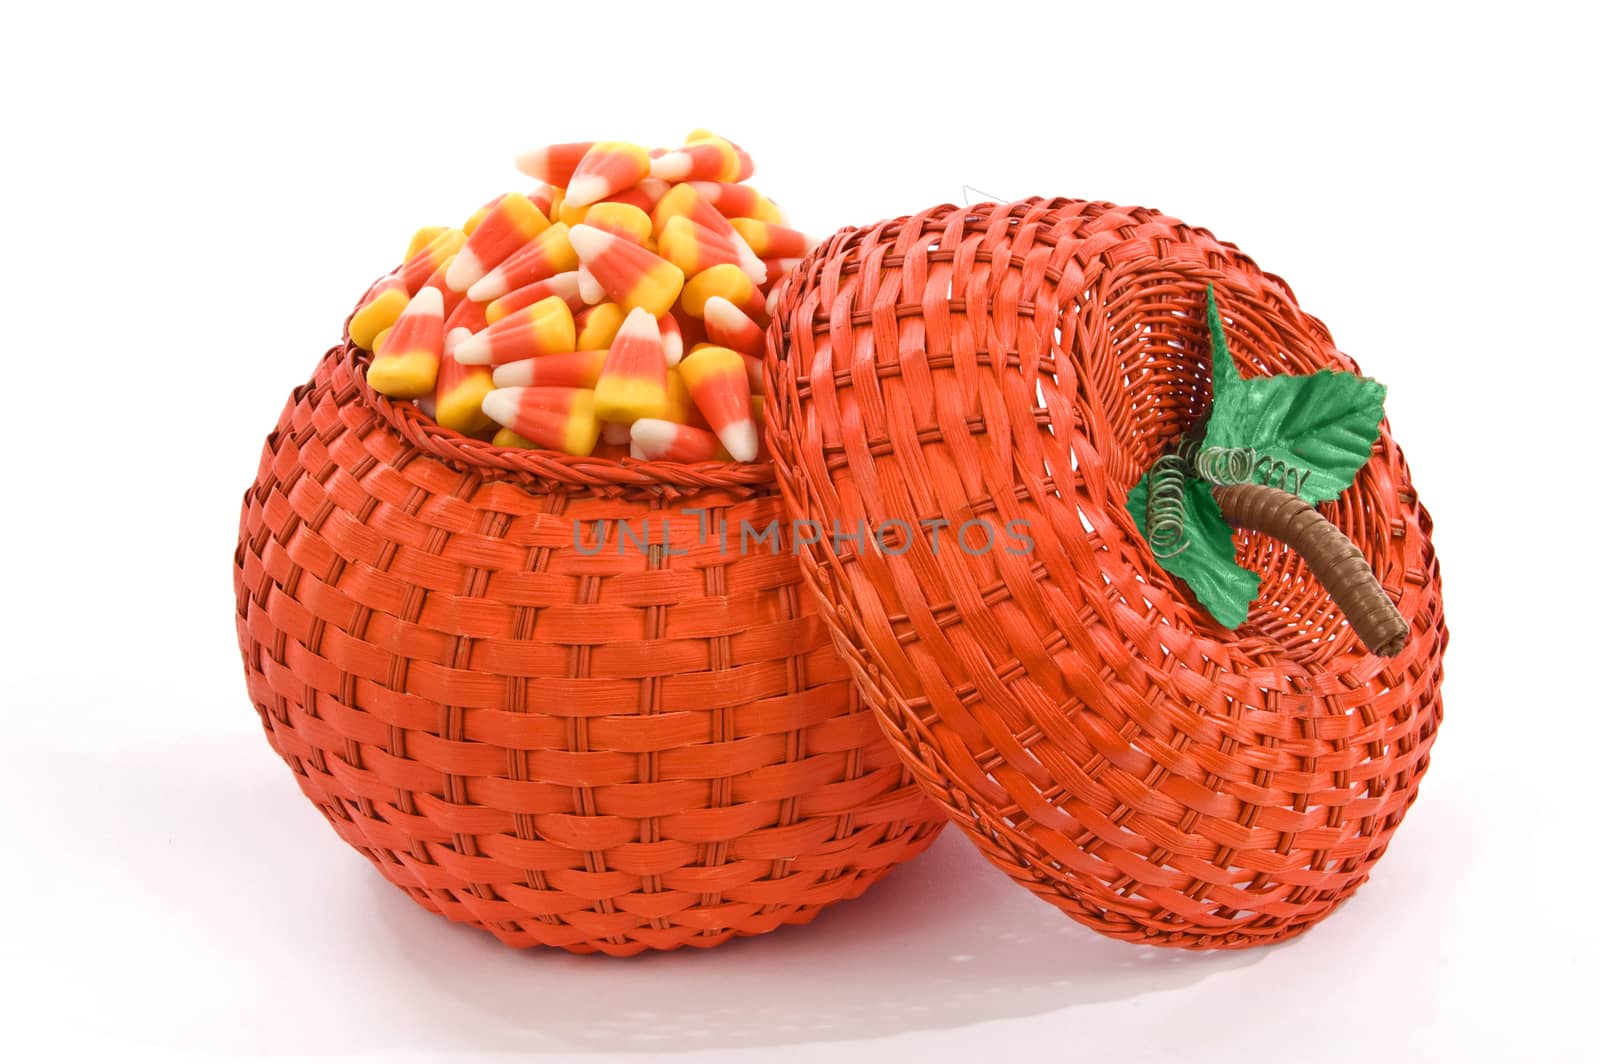 Wicker pumpkin basket full of sweet candy. On white background